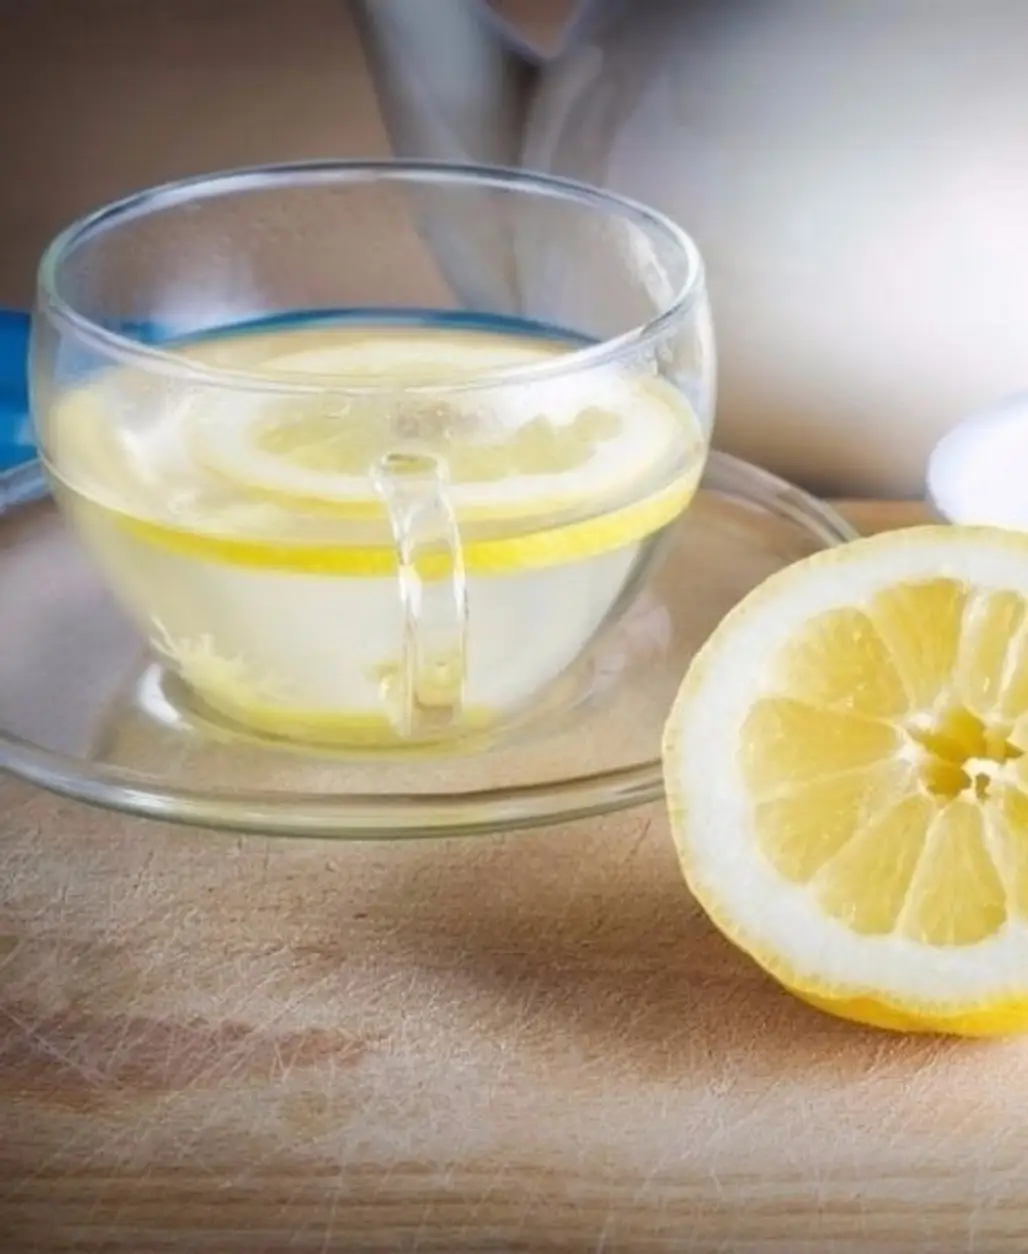 Hot Water and Lemon